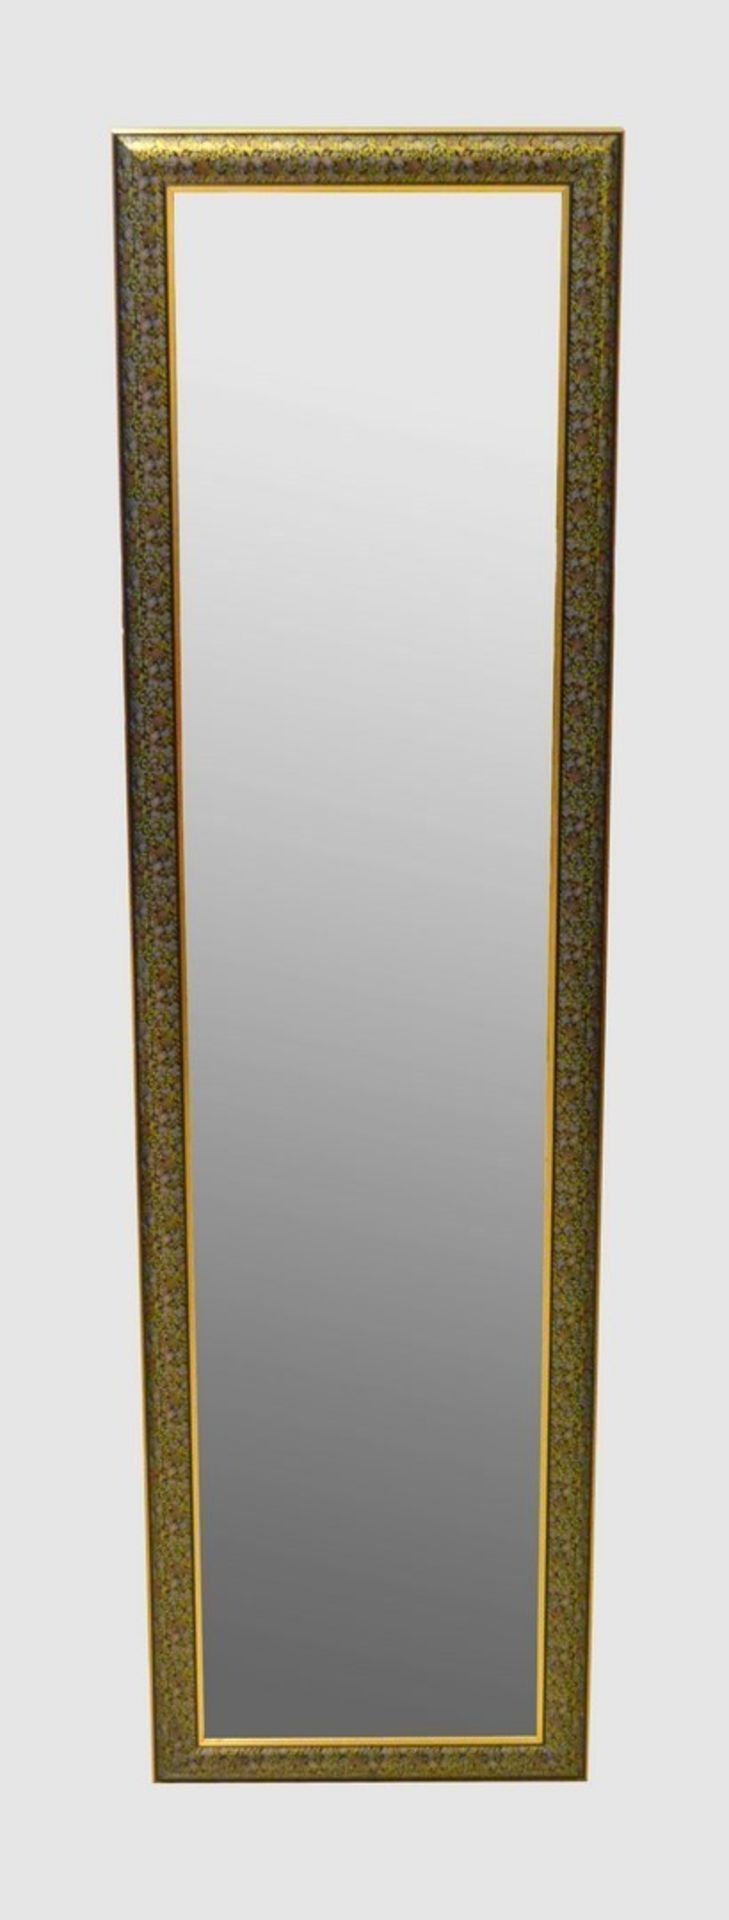 Spiegel rechteckig, verzierter Rand, Spiegel Facetteglas, geschliffen, H 139 cm, B 38 cm